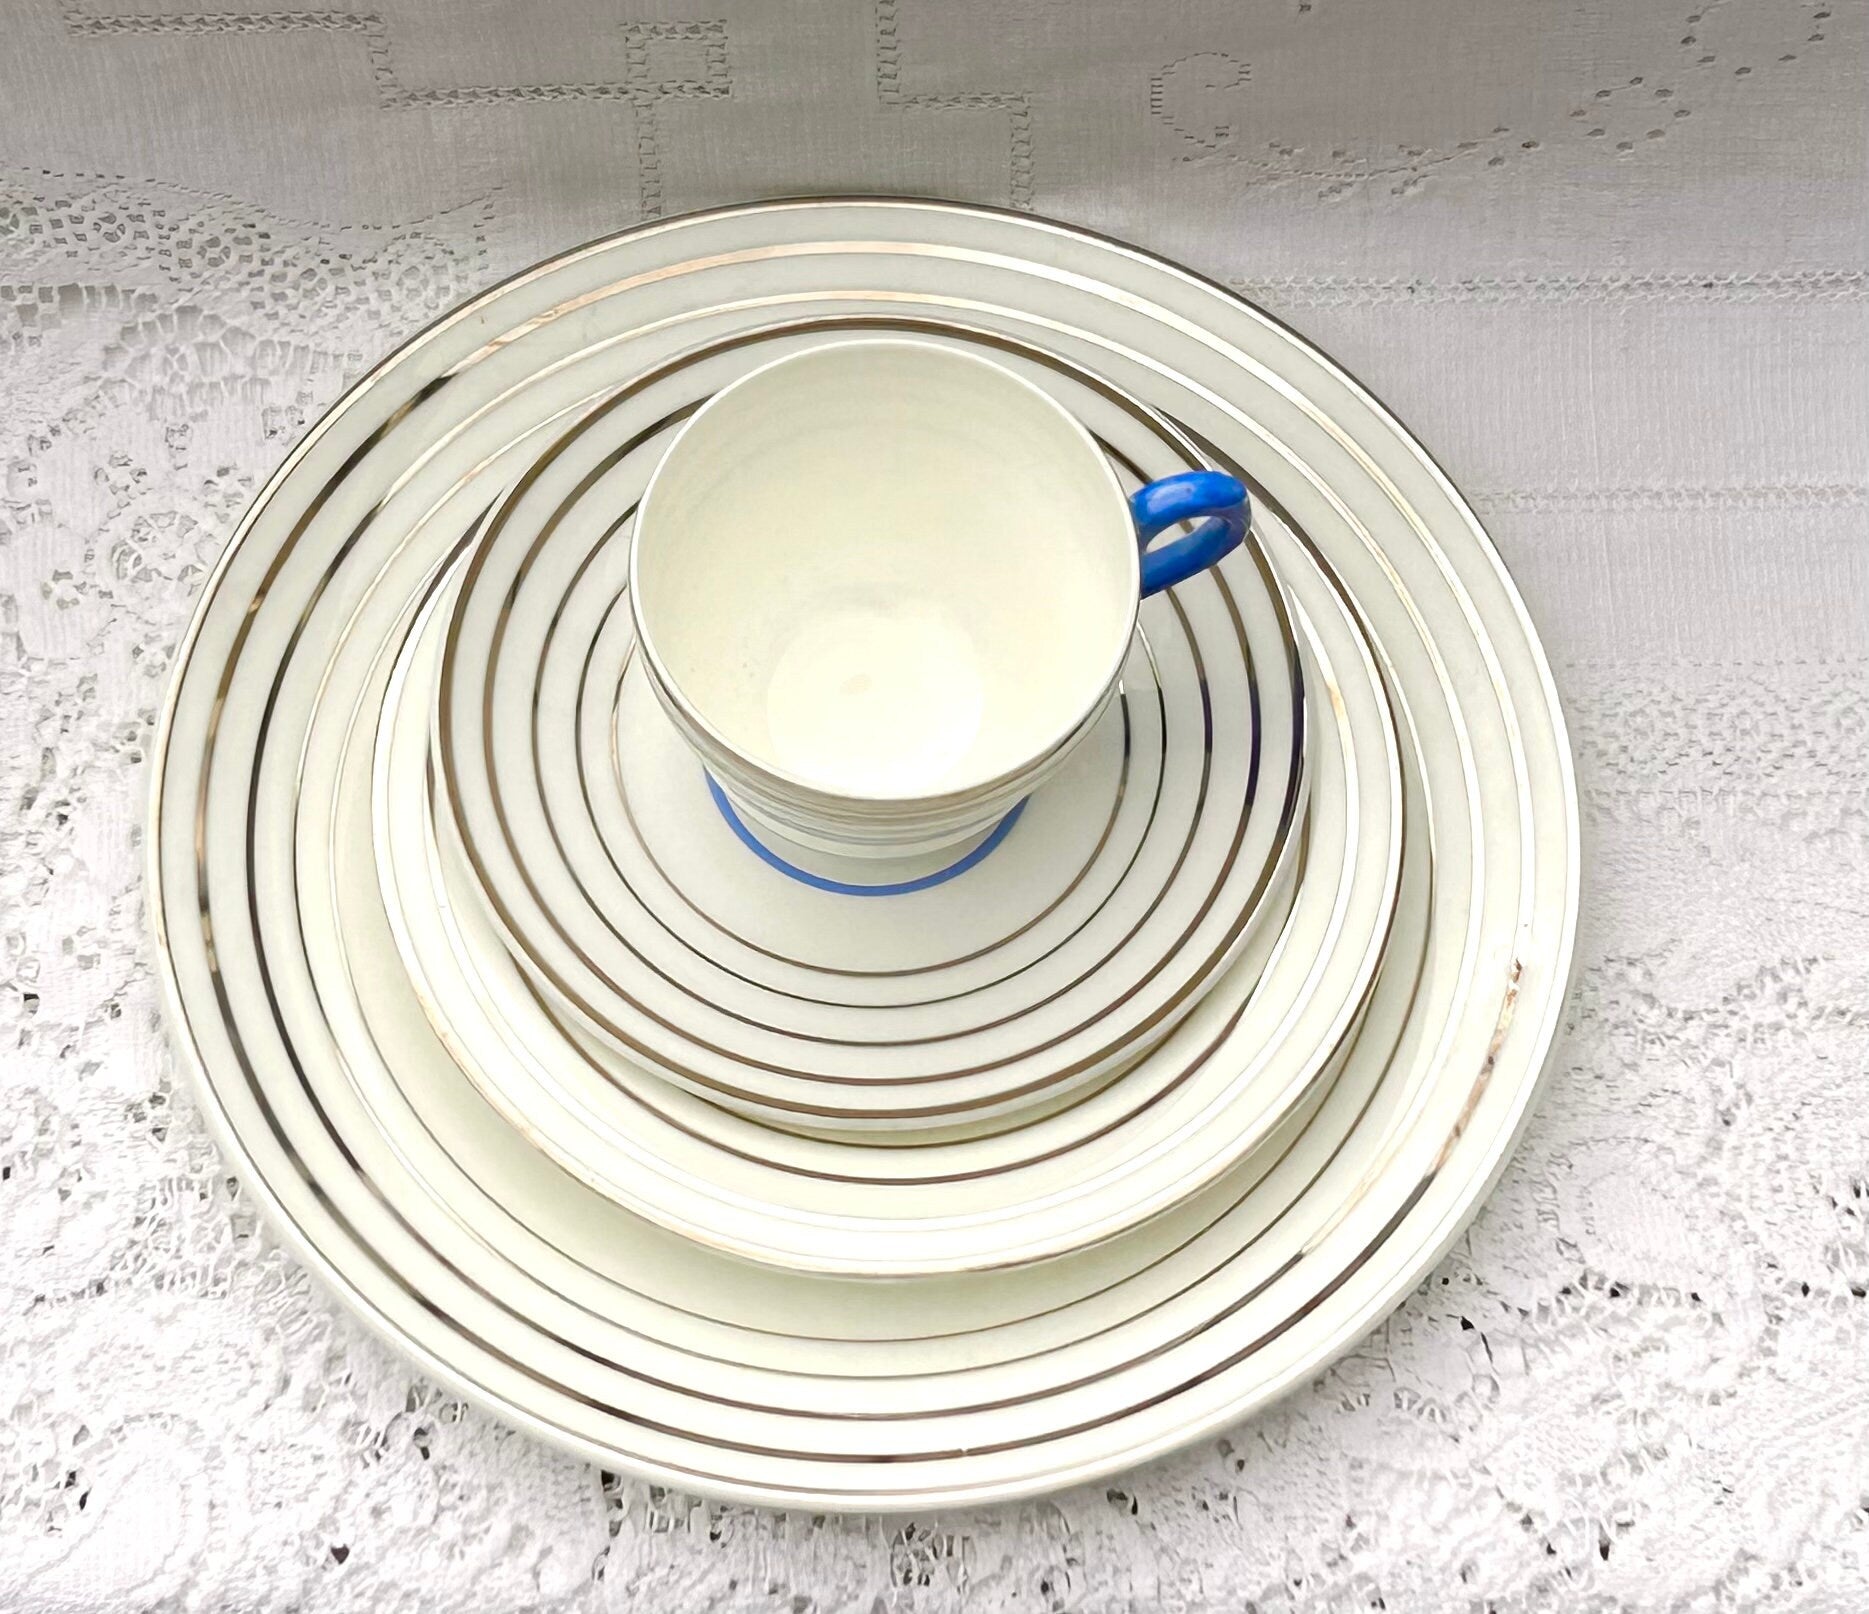 RARE Wedgwood Art Deco Tea Set Tea cups saucers blue white silver bands